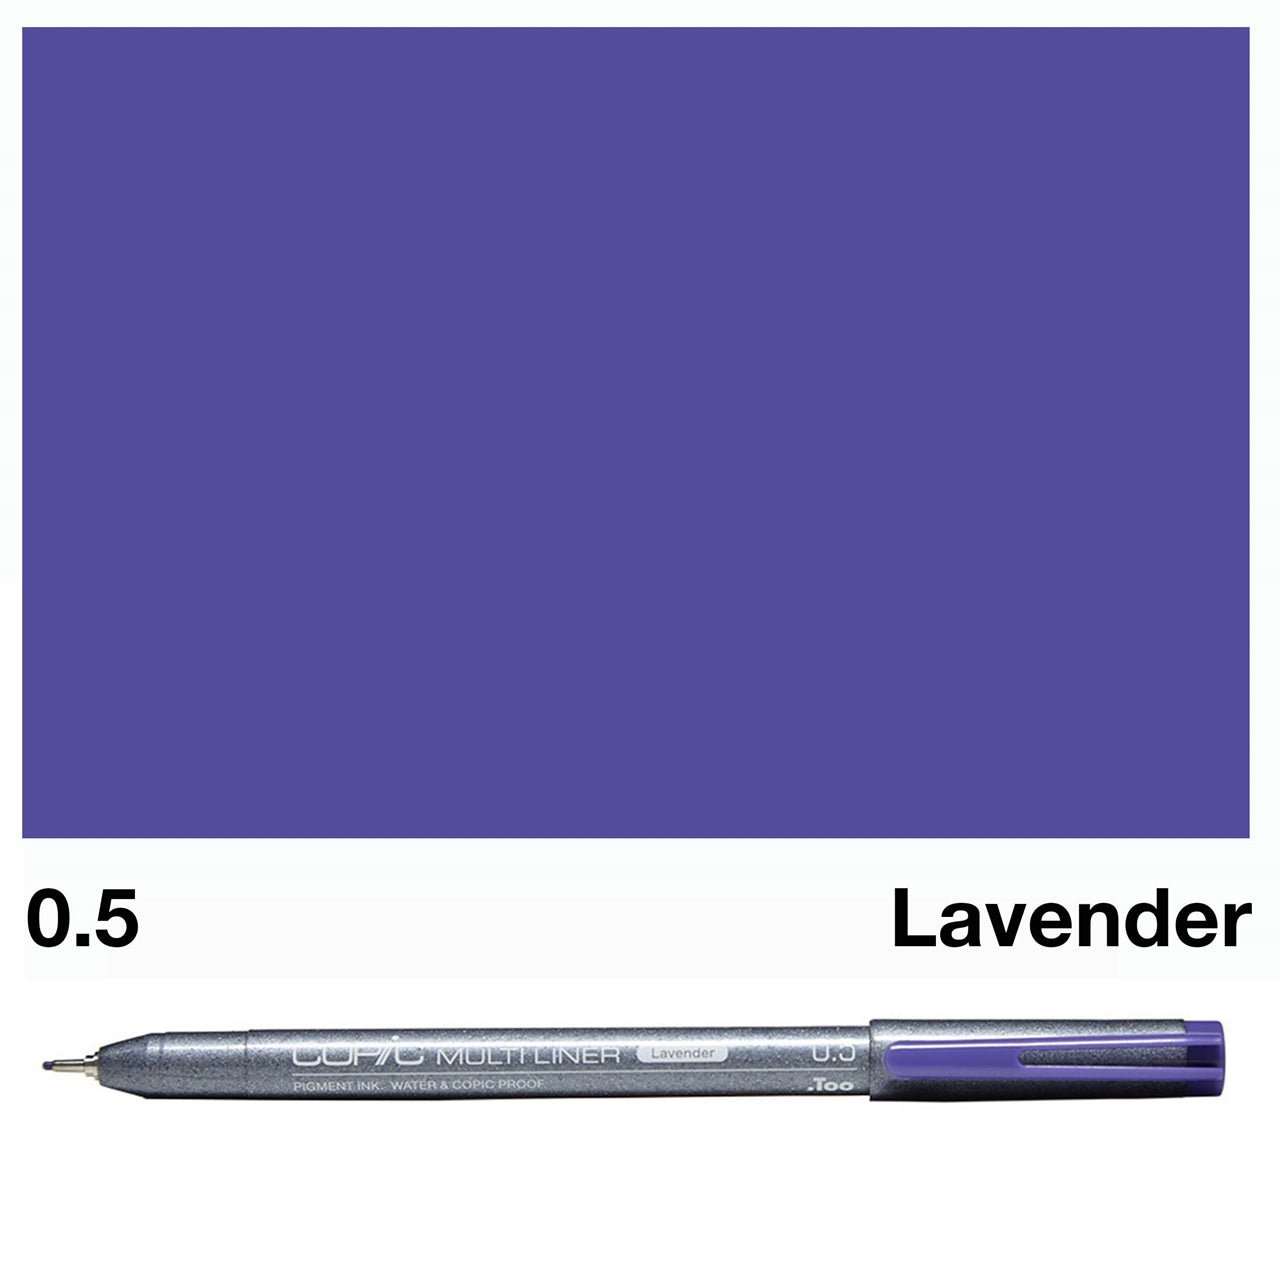 Copic Multi Liner Lavender 0.5mm - theartshop.com.au